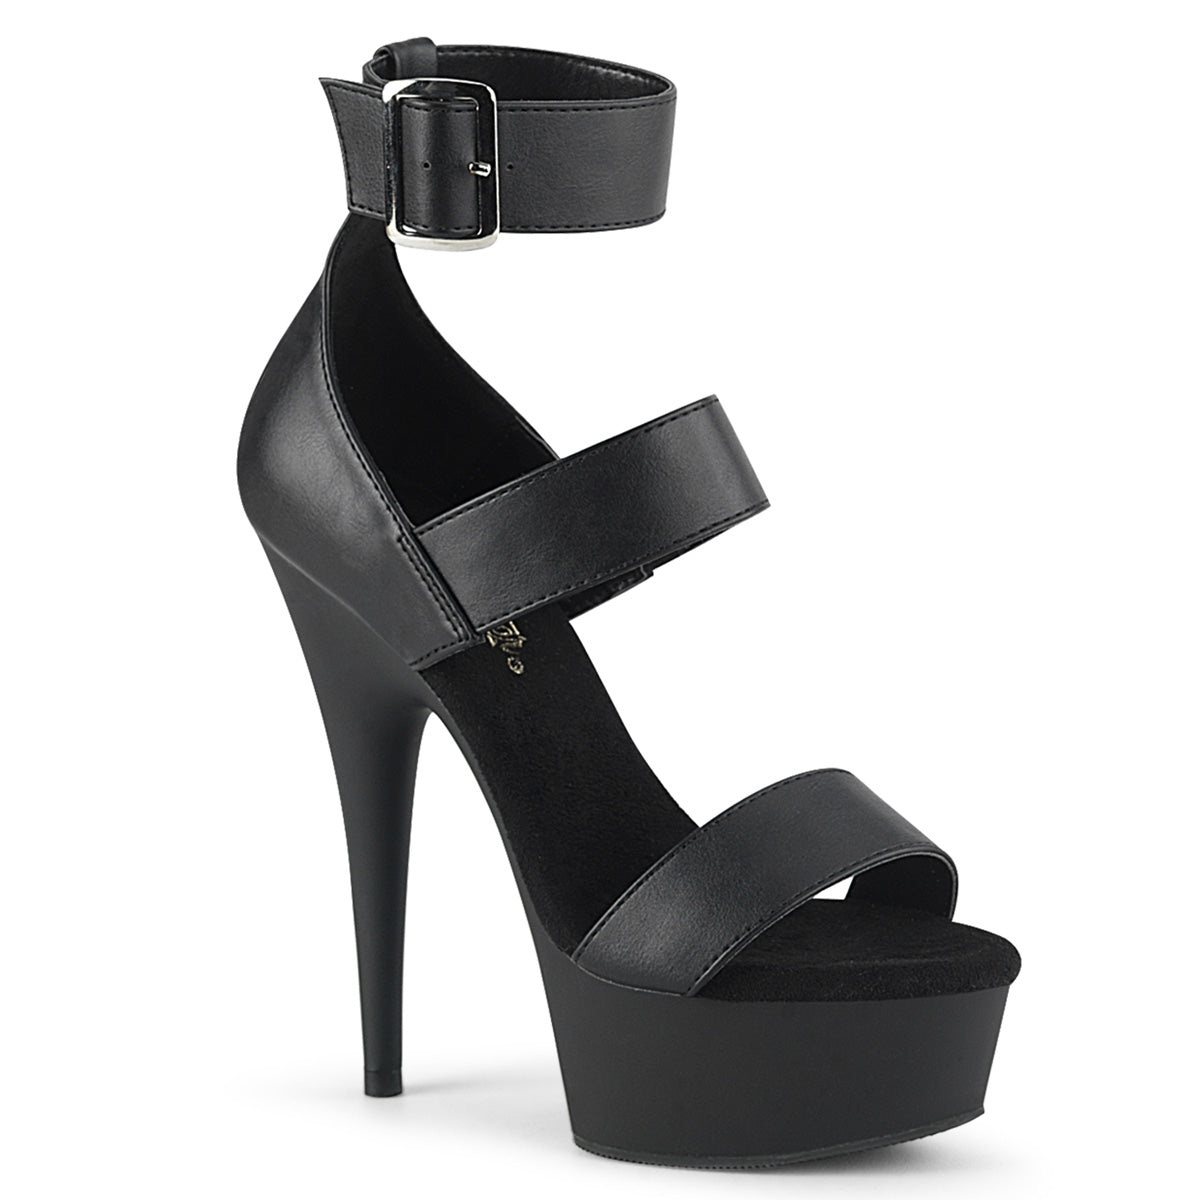 DELIGHT-629 Black Pu, Stripper Sandals, Pleaser Shoes, 6 Inch Heels ...